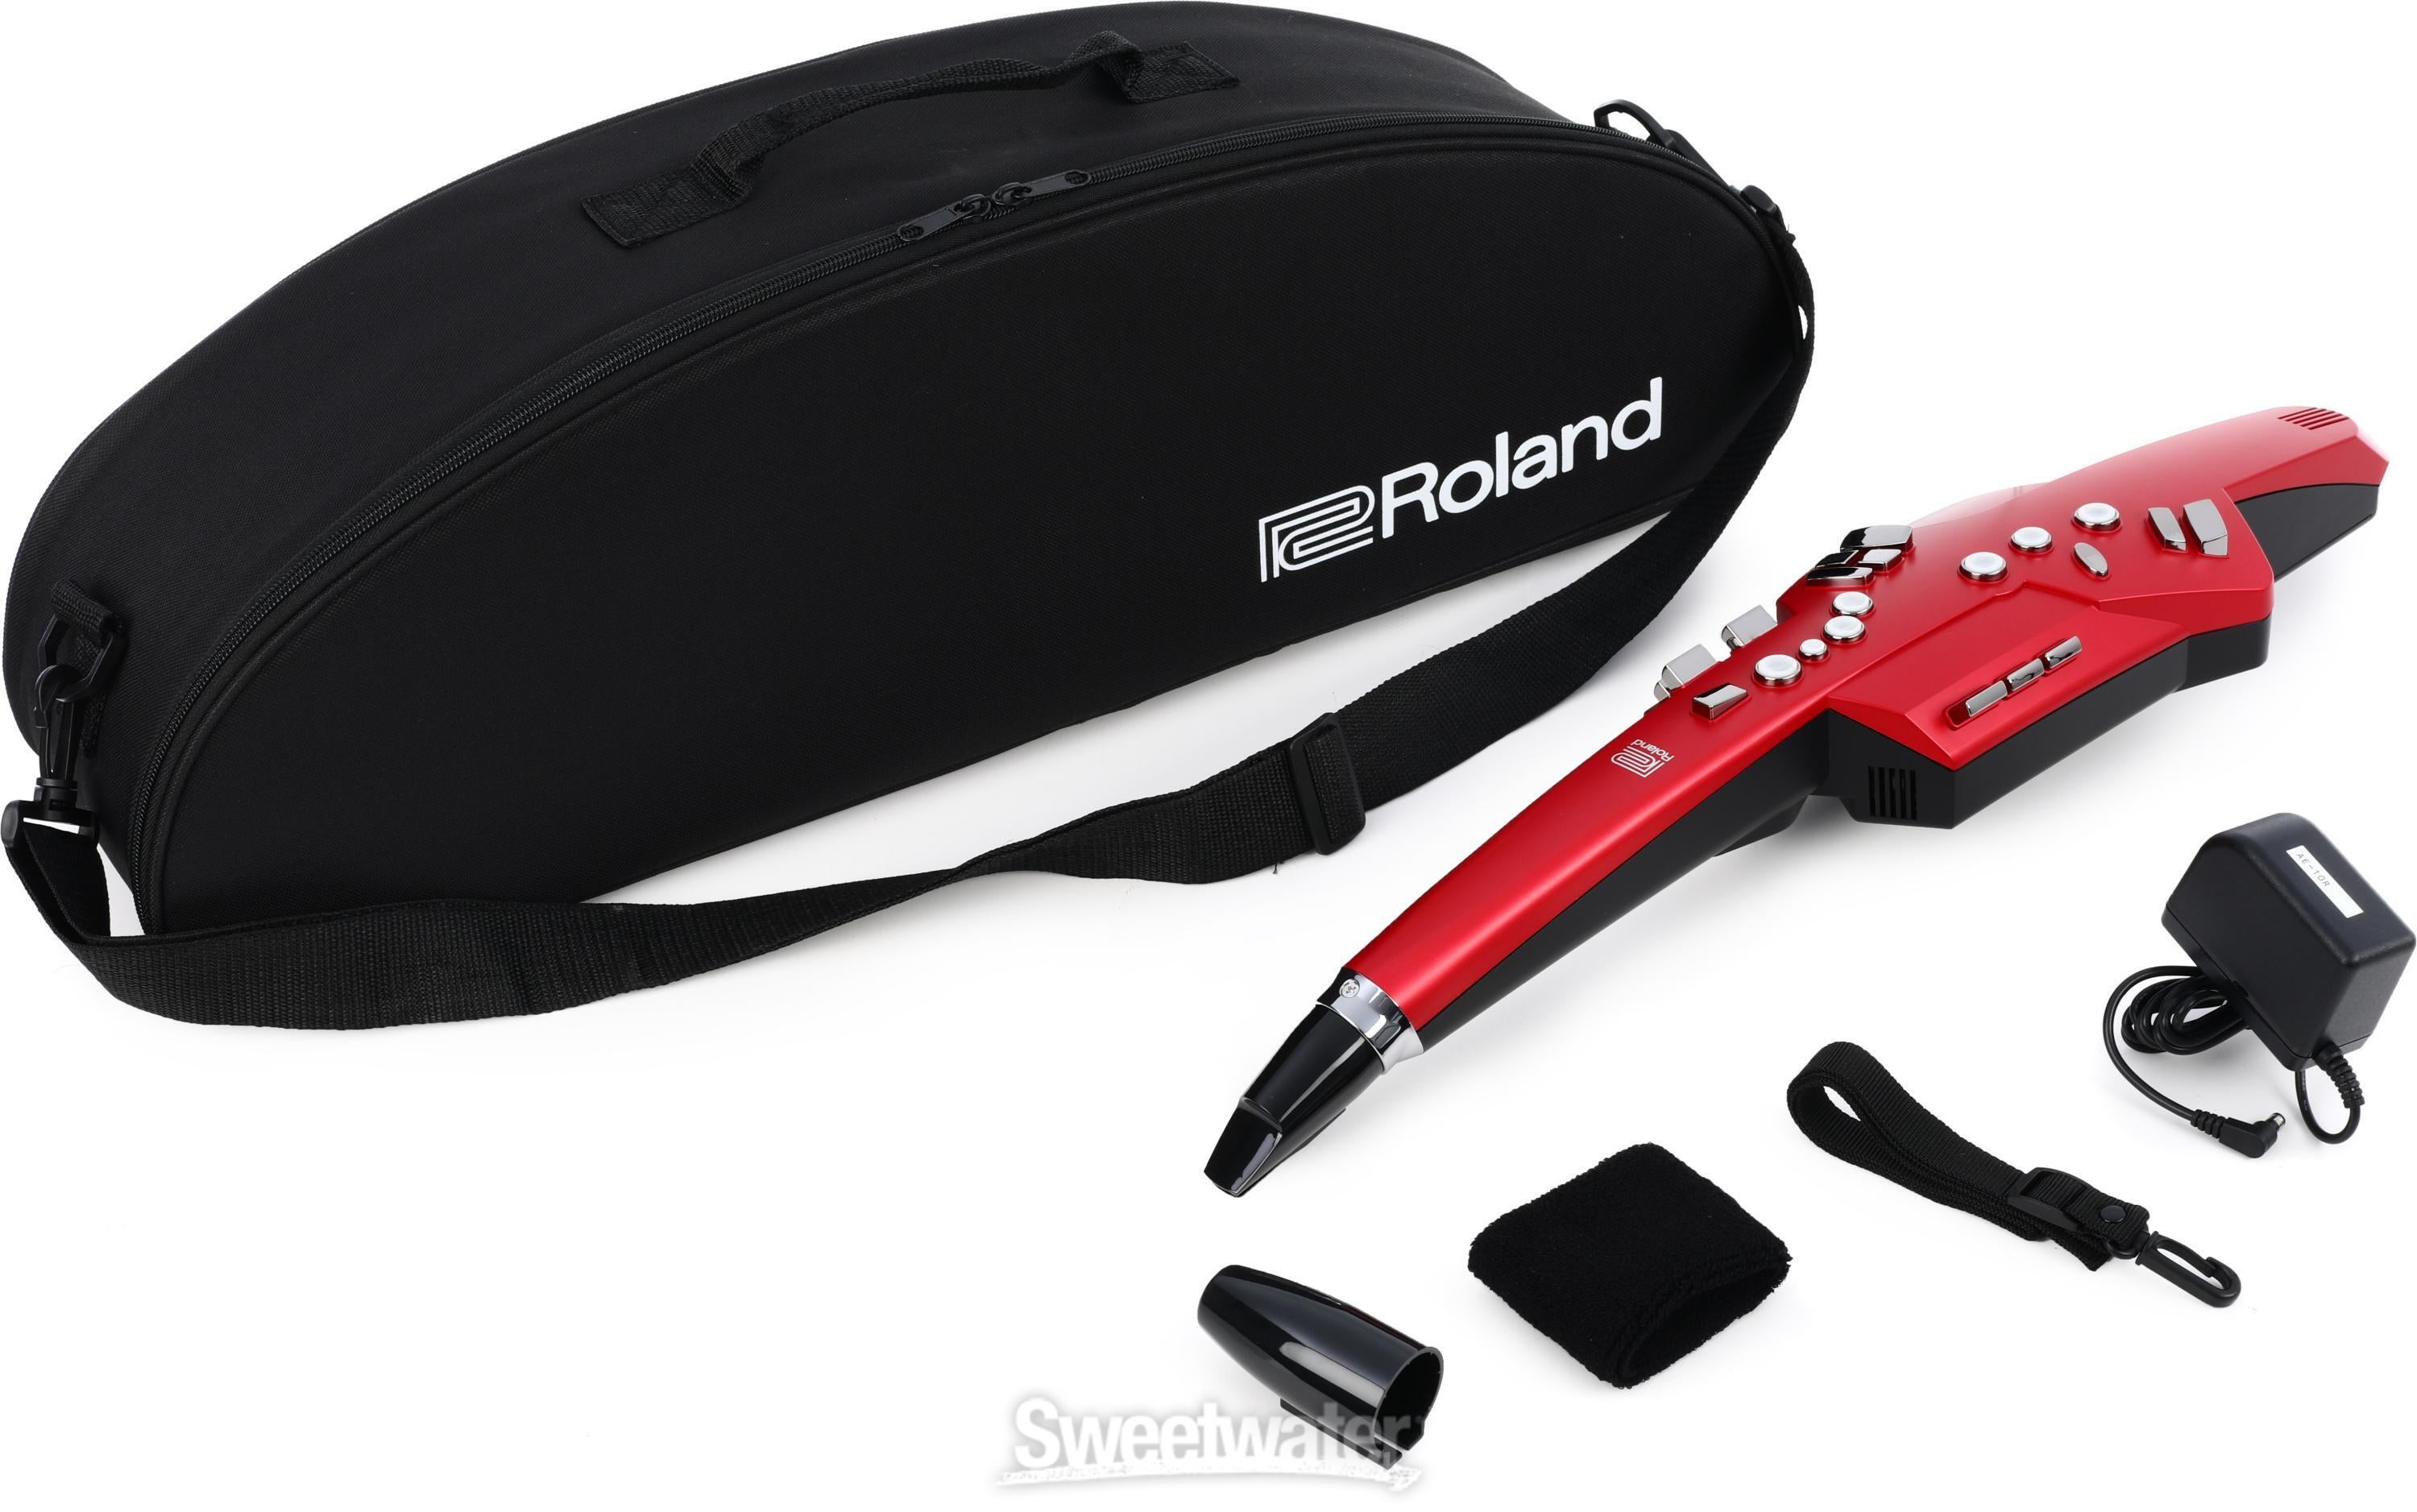 Roland Aerophone AE-10R Digital Wind Instrument - Red | Sweetwater